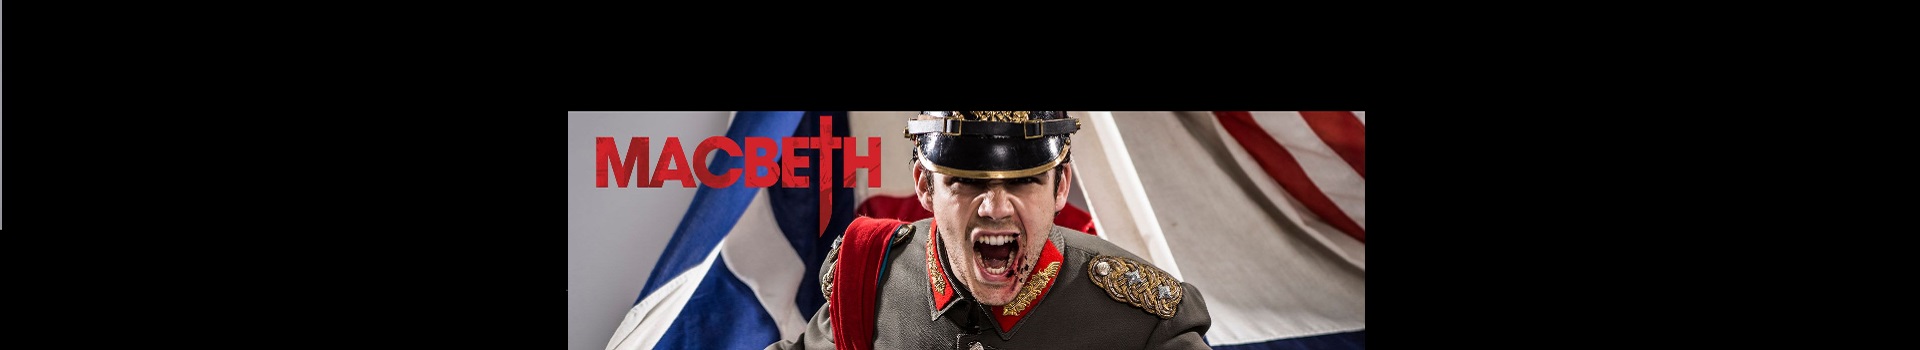 NYT: Macbeth banner image